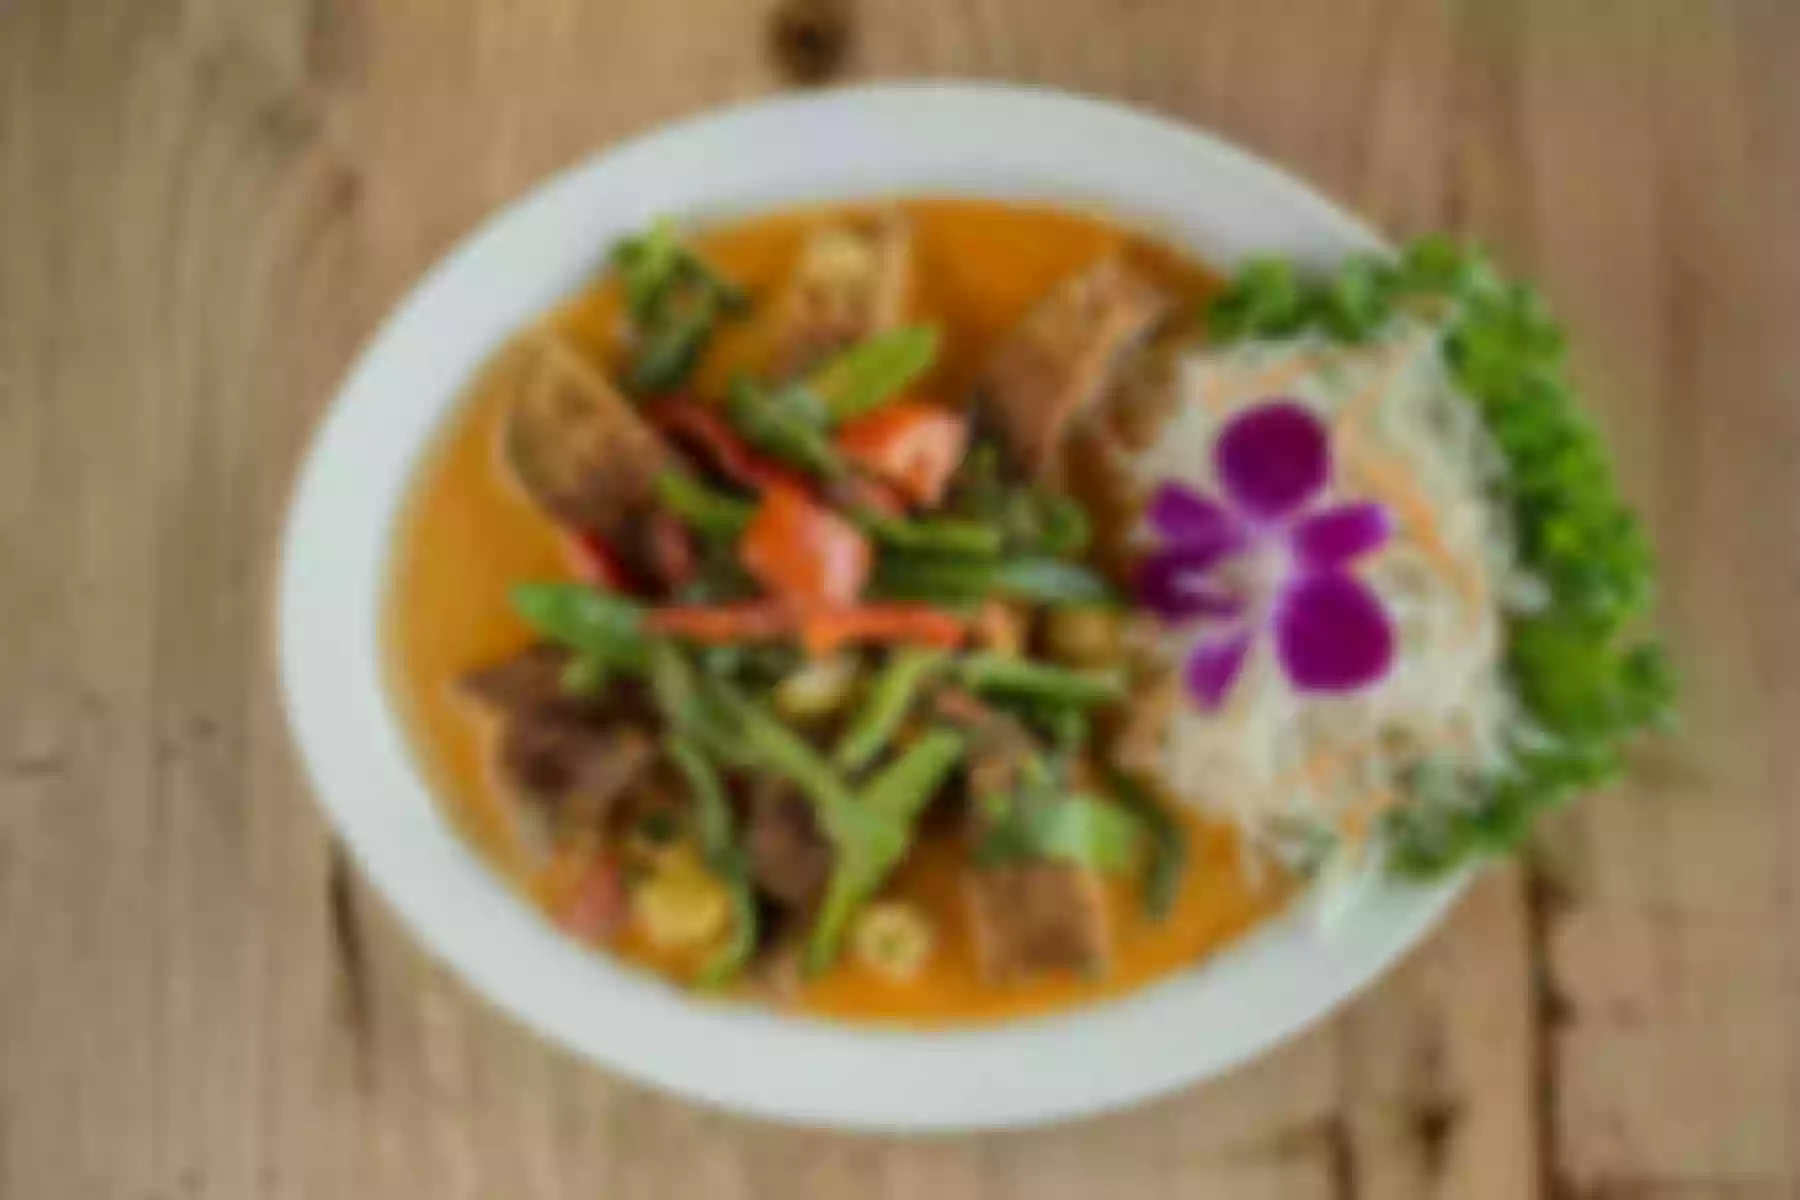 Basil Thai Cuisine-Charlotte, NC